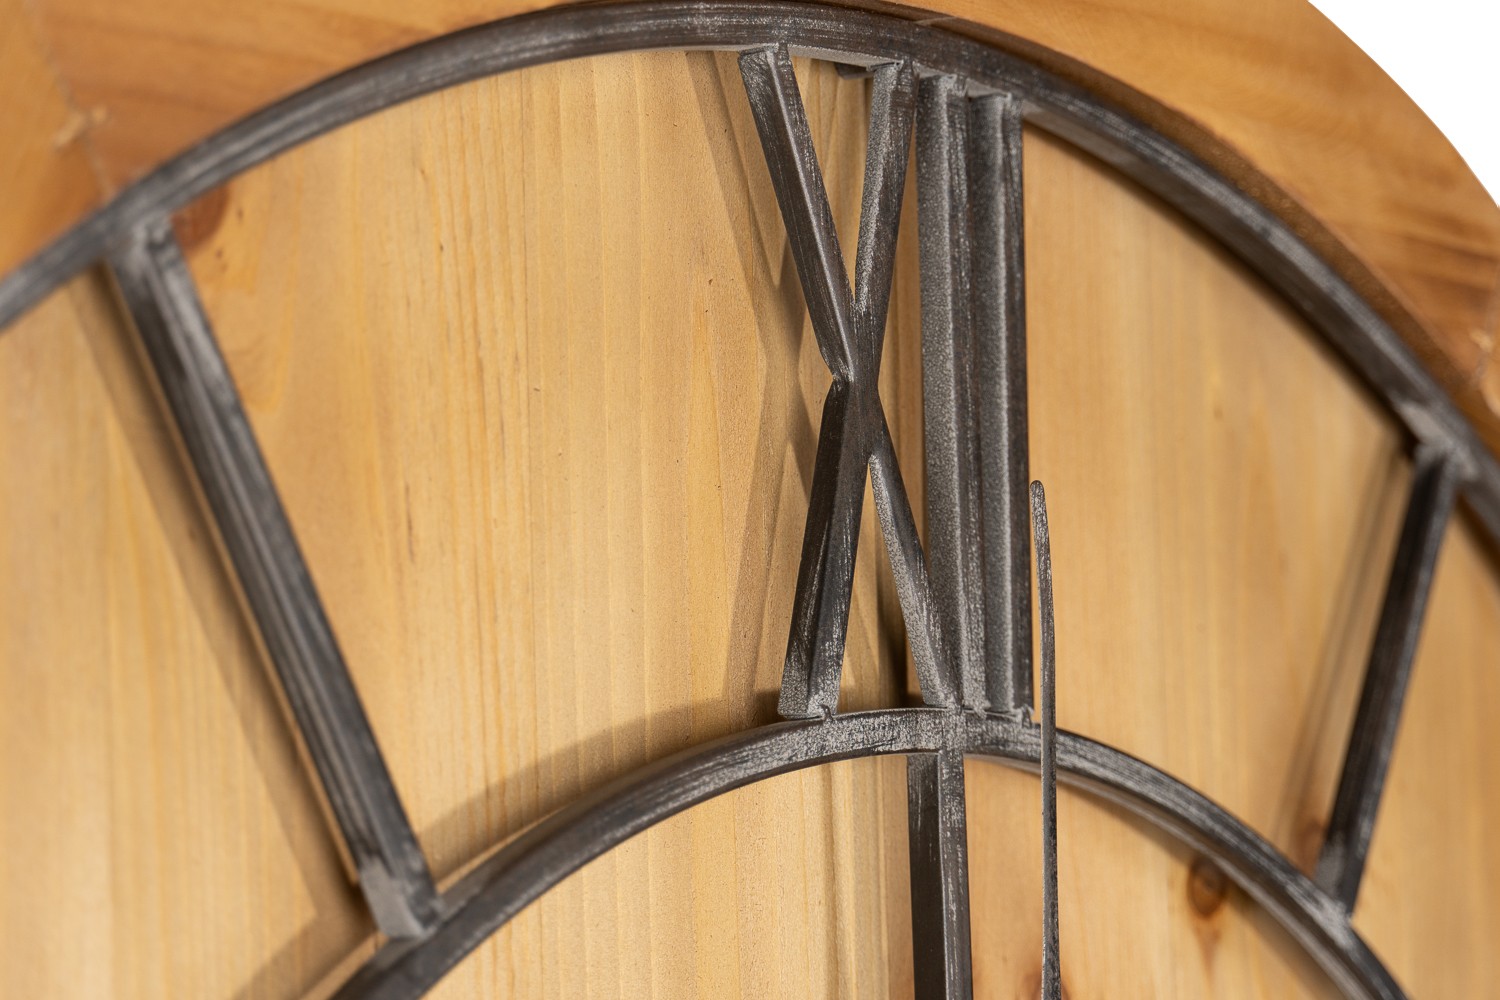 Williston Large Wooden Wall Clock - Image 3